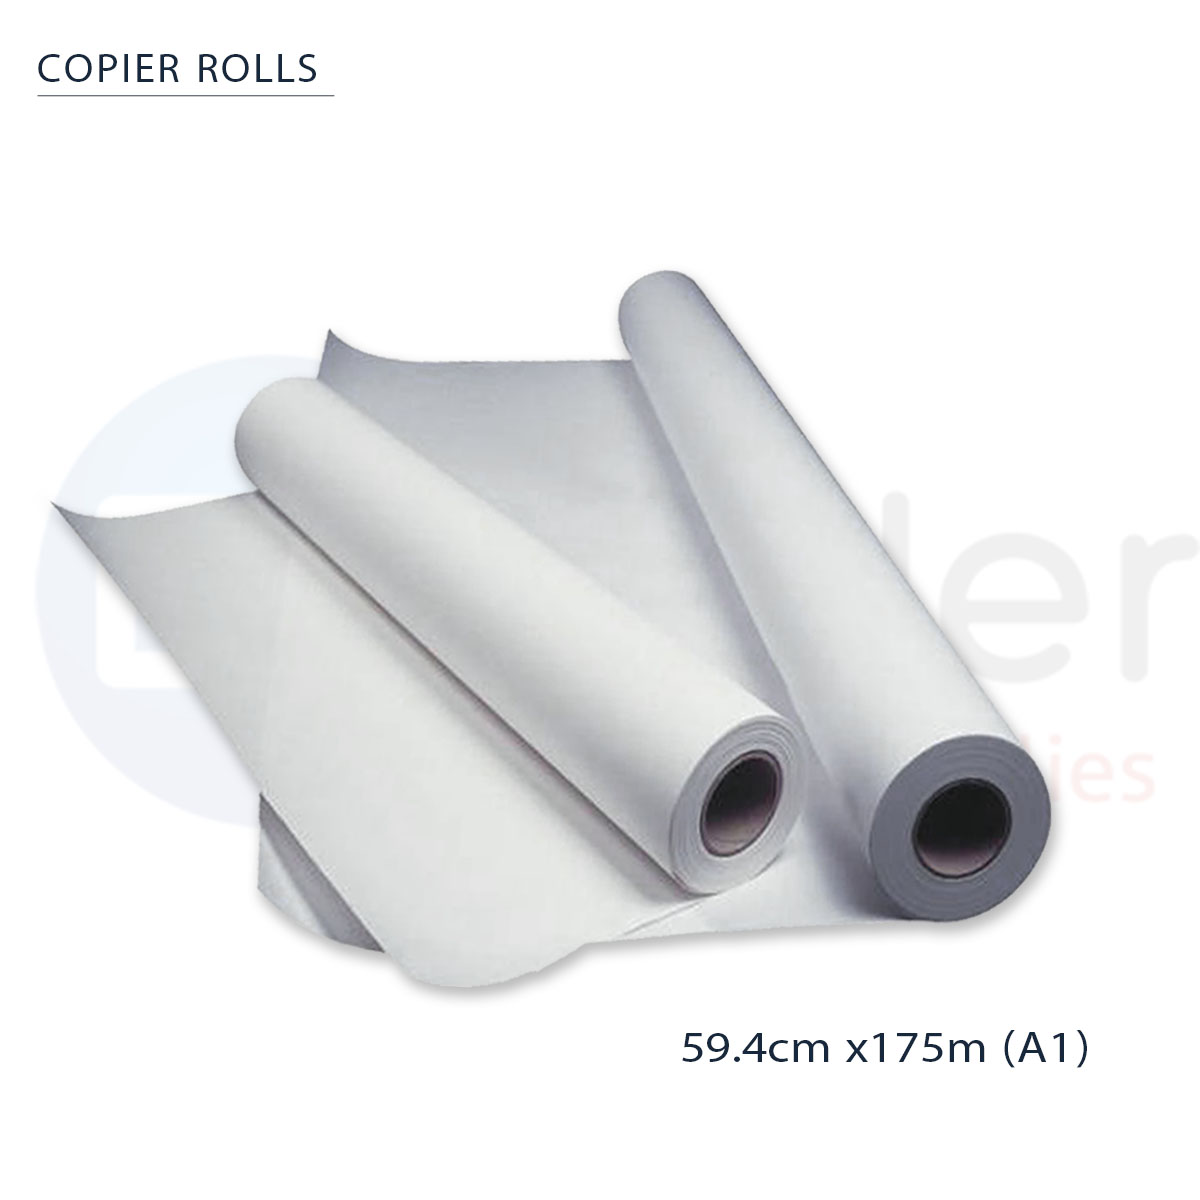 Copier Roll A1 (59.4cmx175m) KANGAS, Core-7.5cm